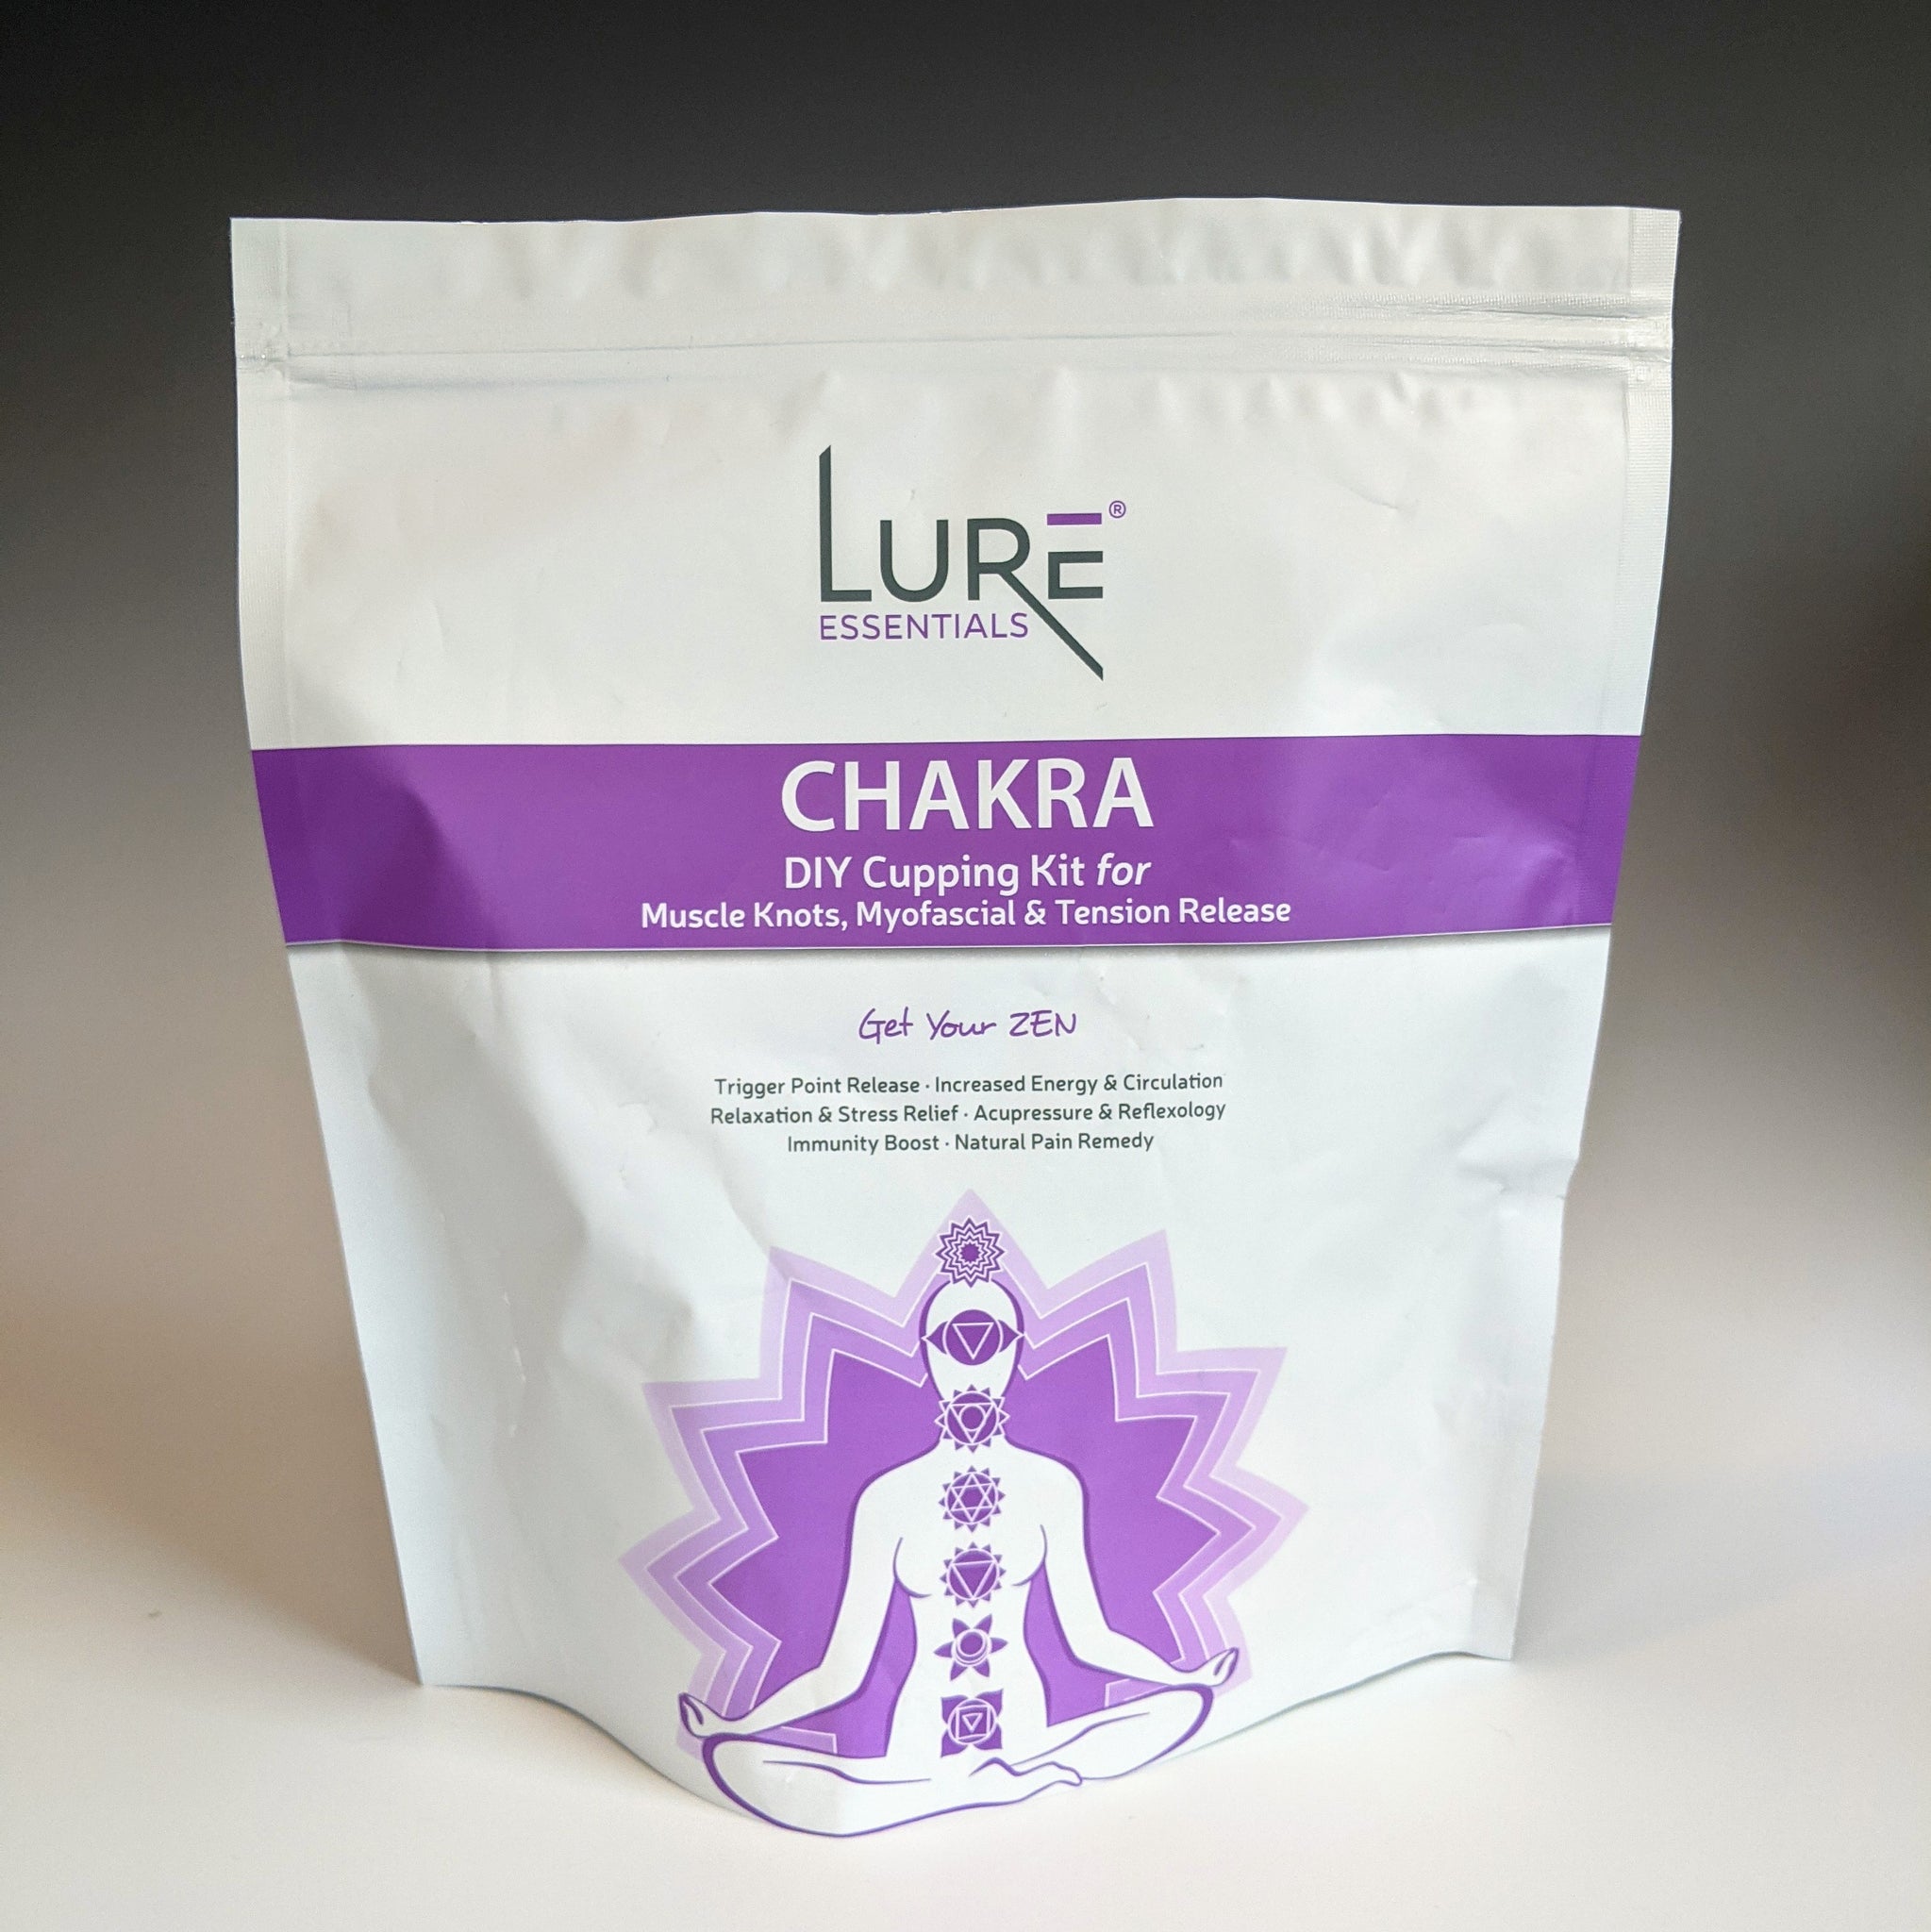 Lure Essentials Chakra DIY Cupping Kit